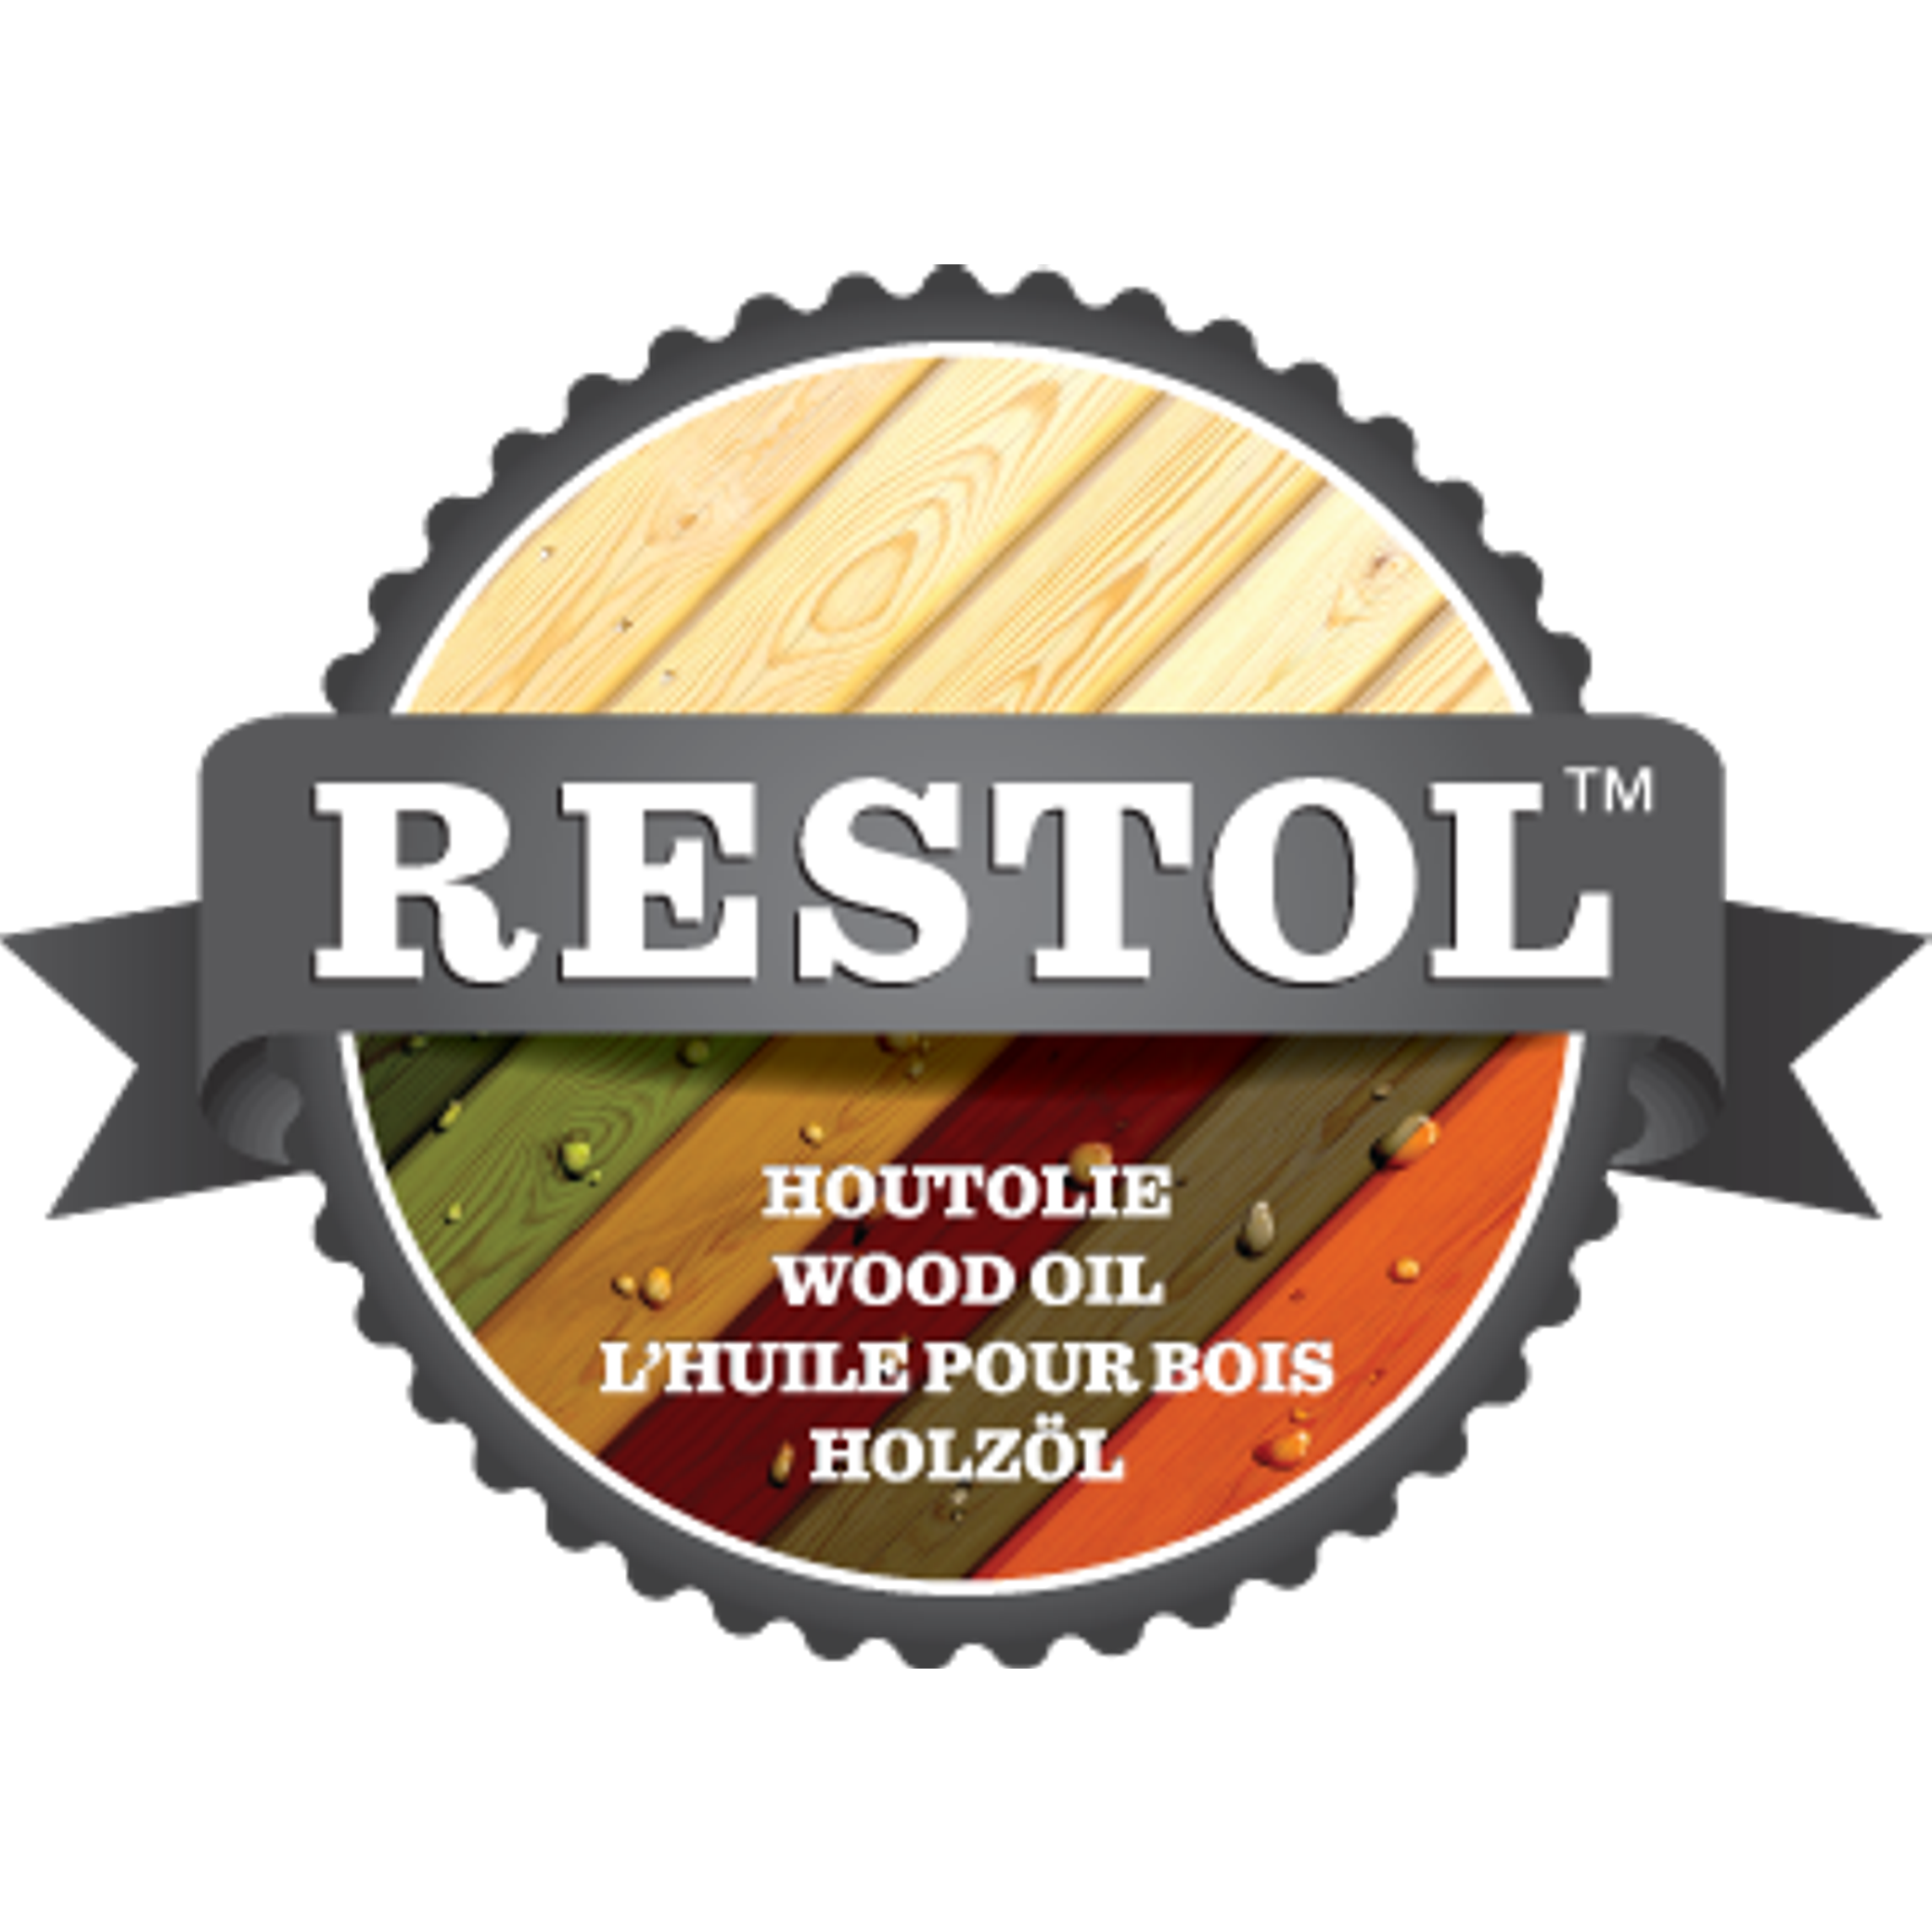 Restol® Wood Oil